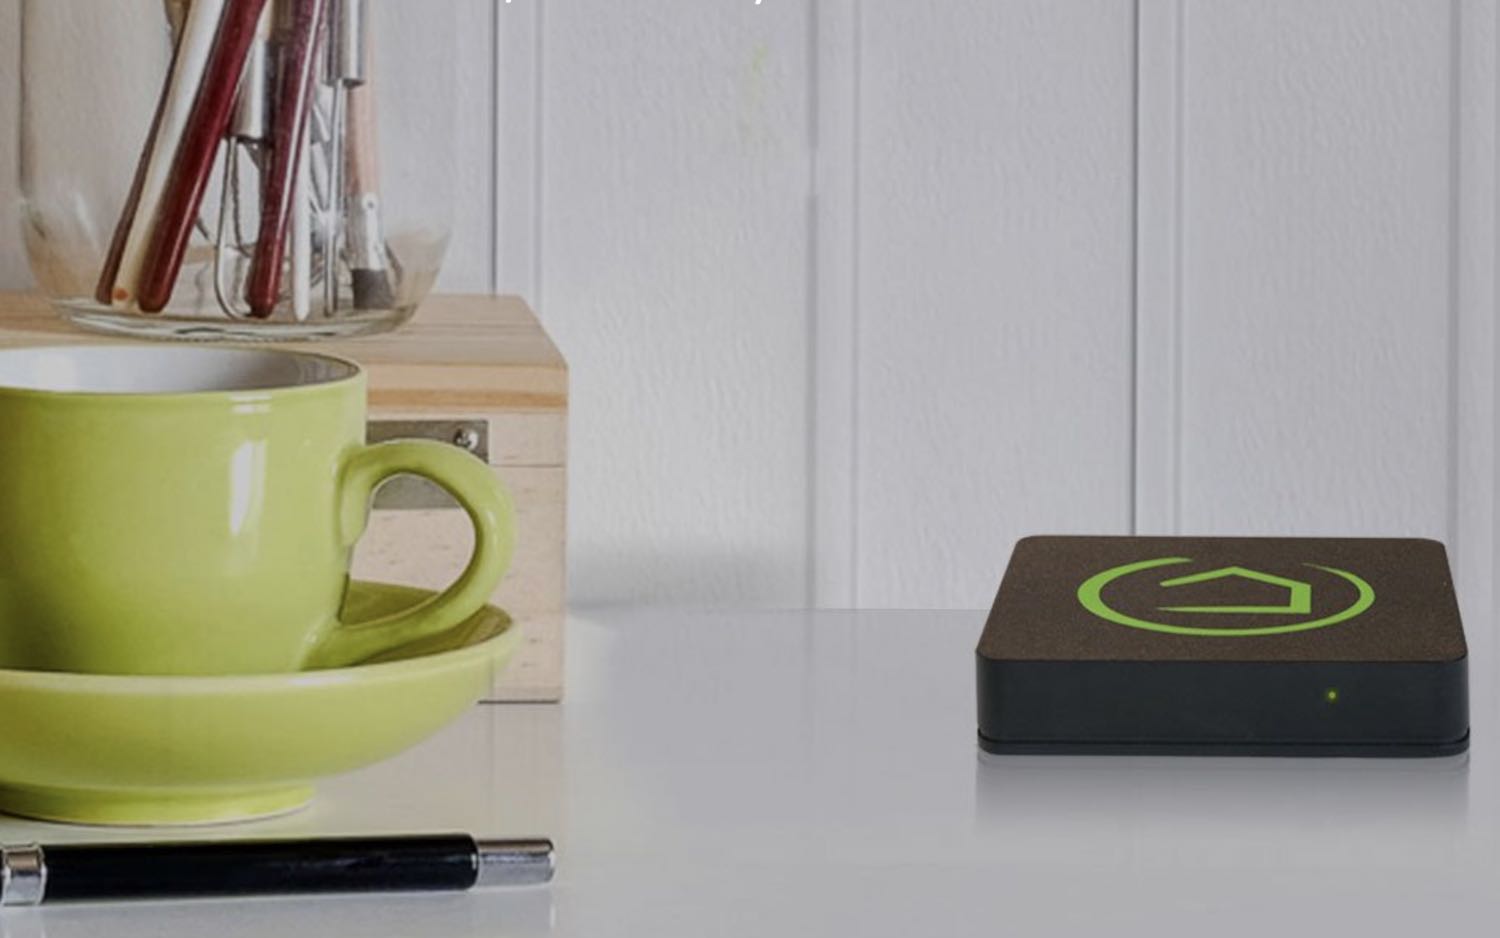 ZigBee Smart Socket Outlet for SmartThings, Hubtat, Philips Hue